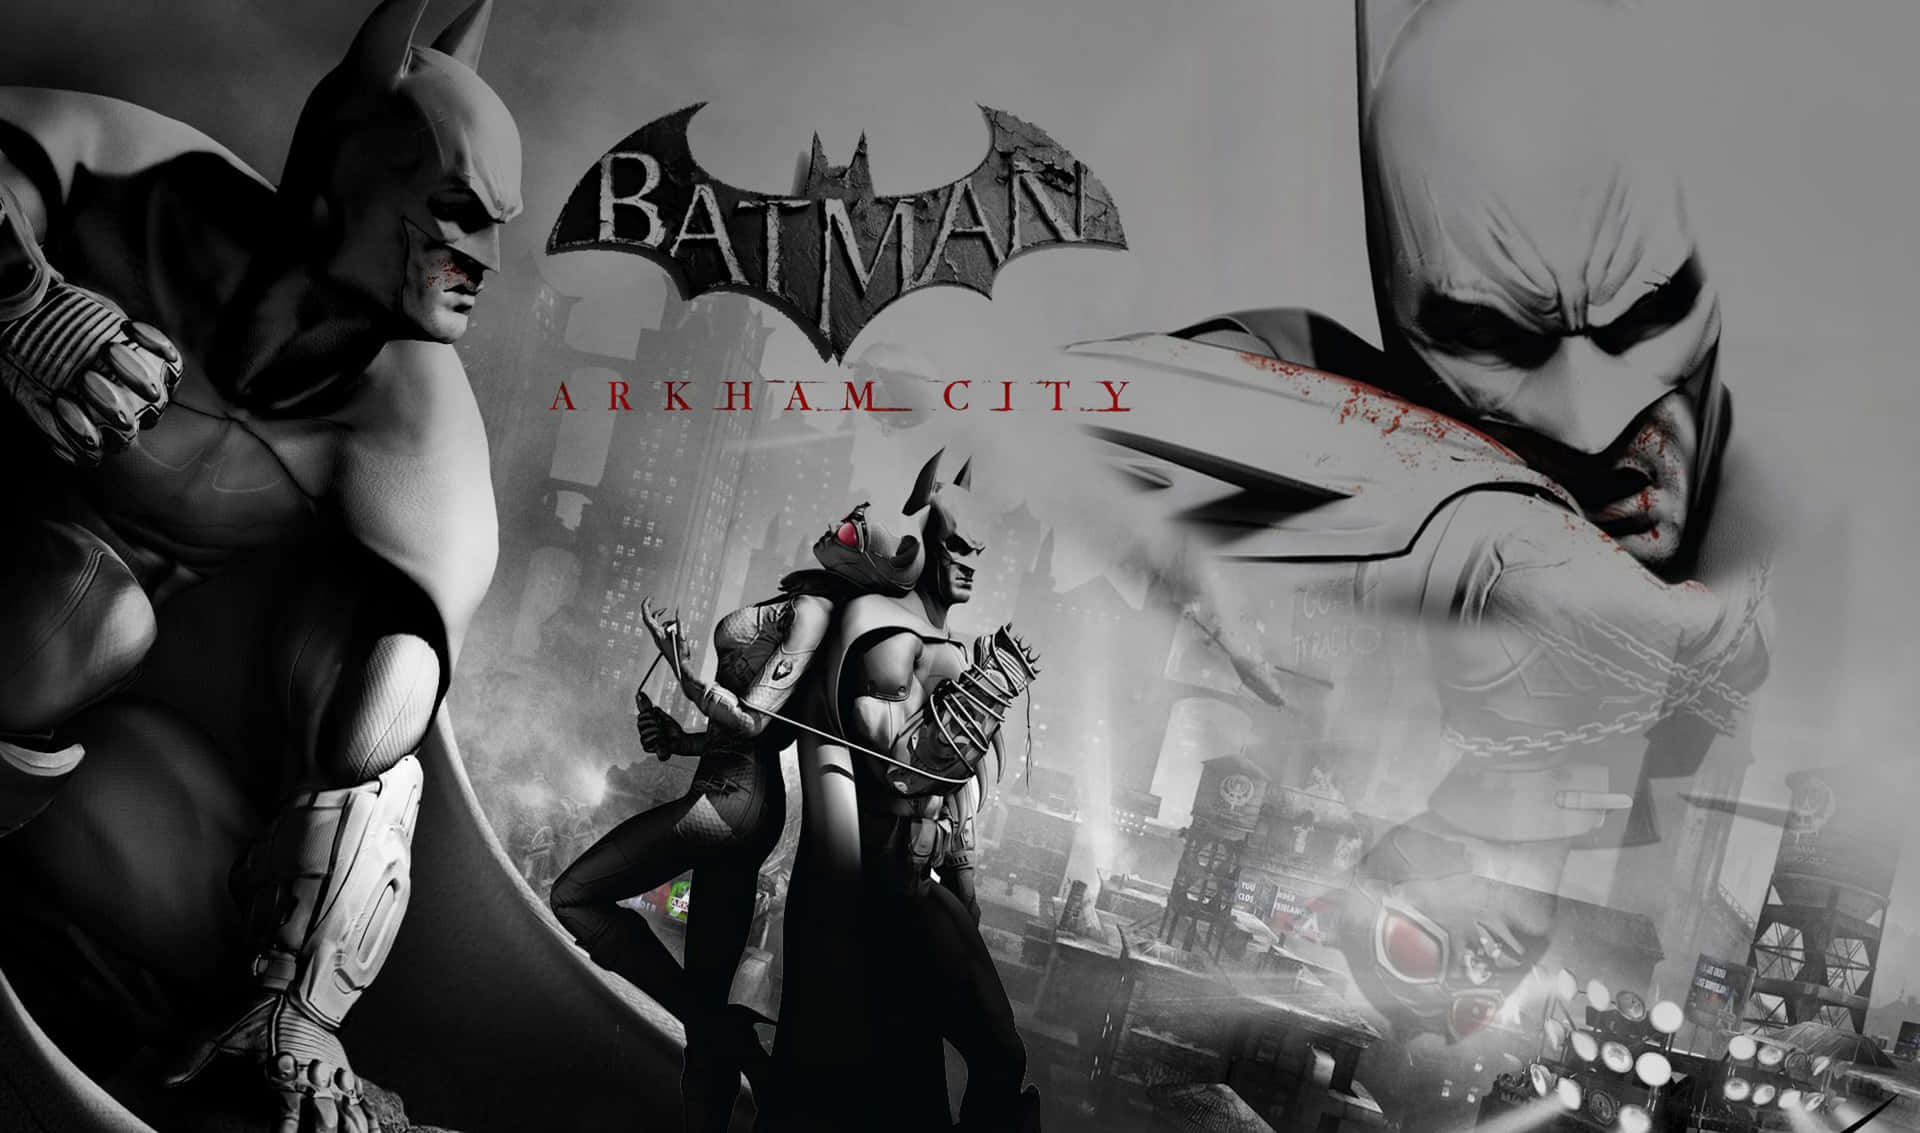 Batarang soaring in the night sky under the Batman Arkham City skyline